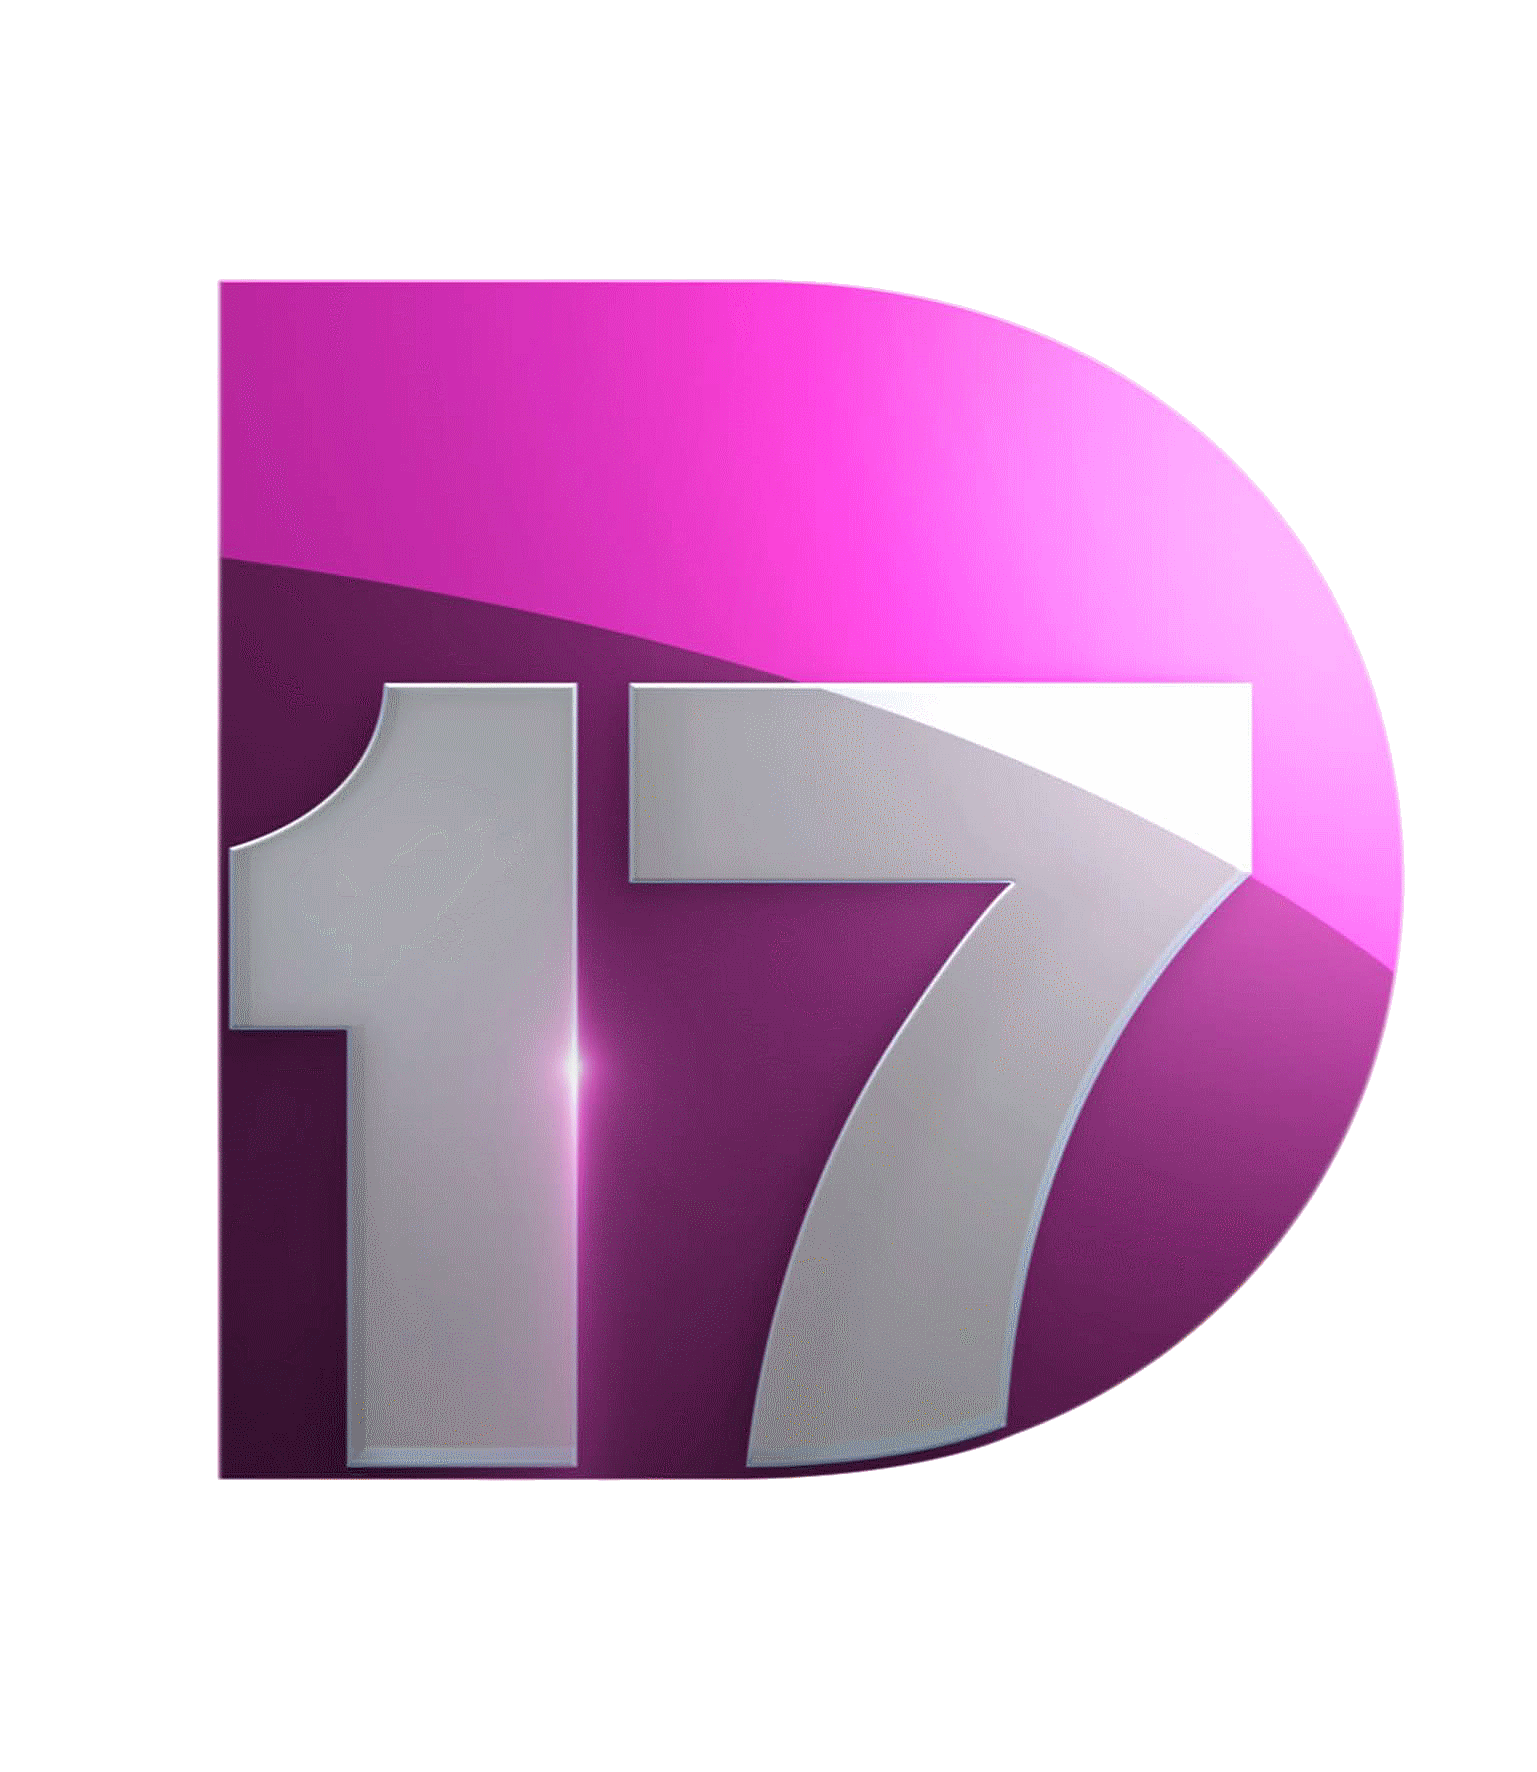 Логотип 17. 17 Лого. Канал d. Телеканал е. ТВ-017.